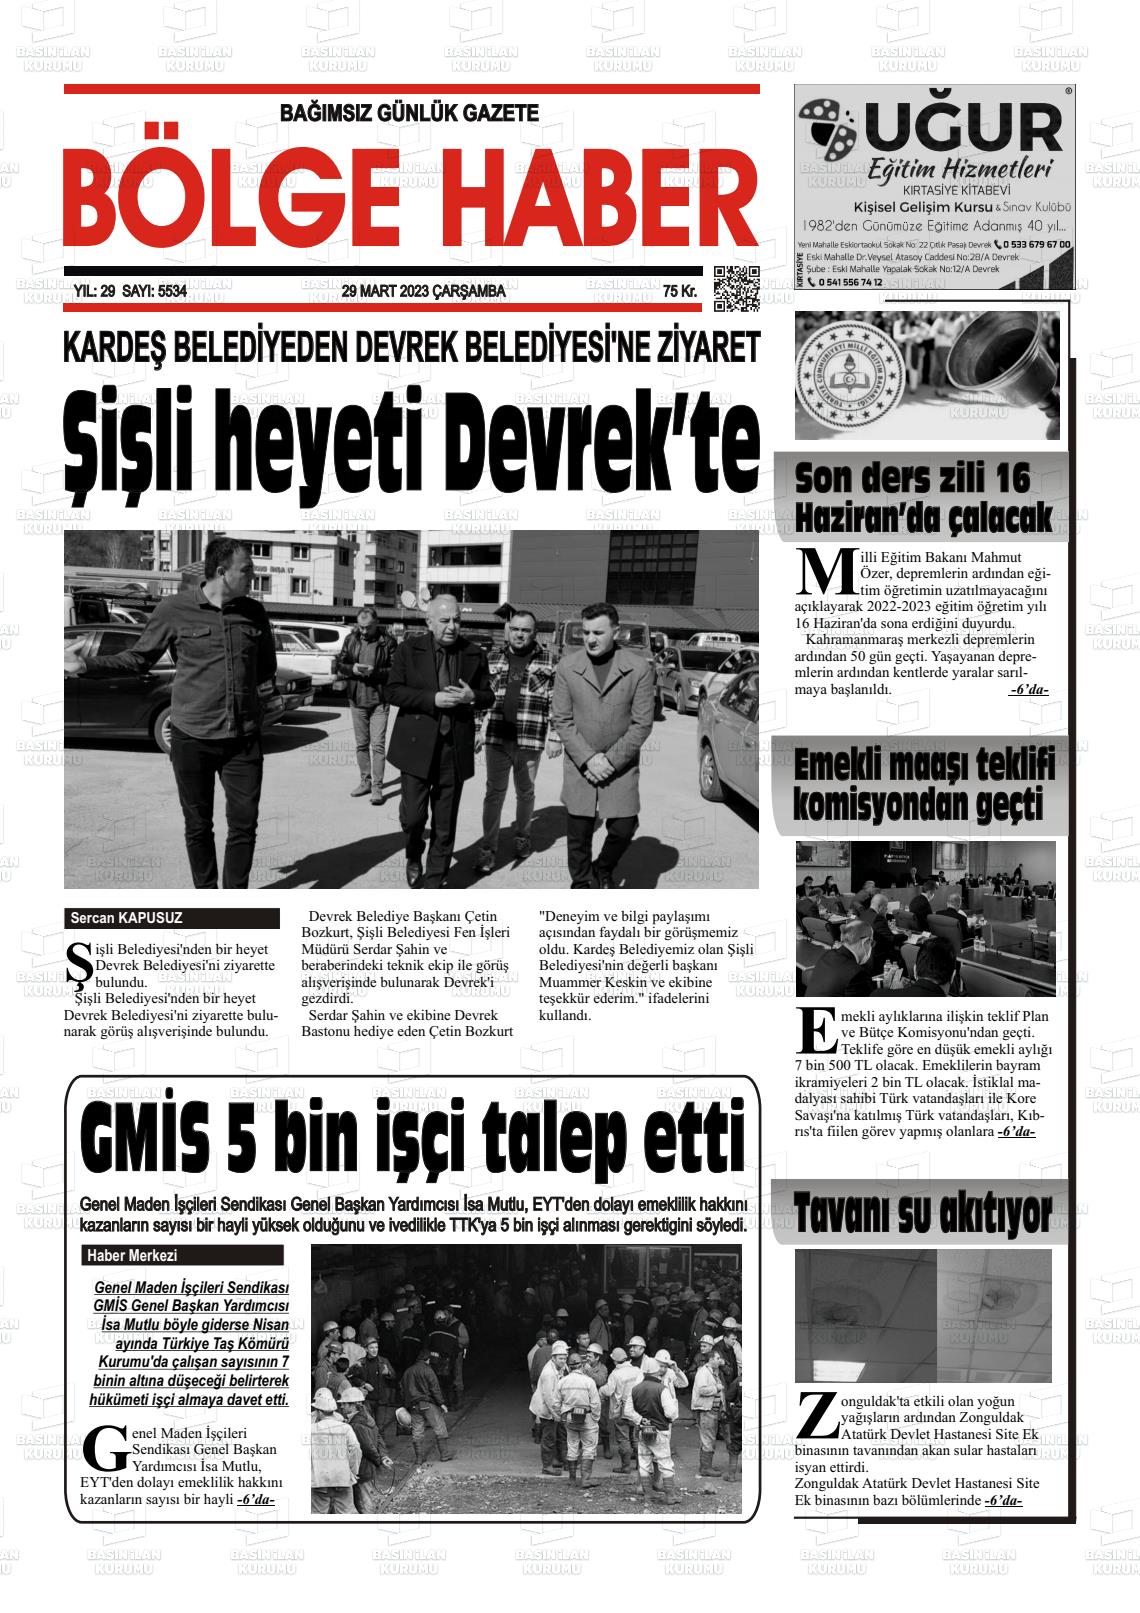 29 Mart 2023 Devrek Bölge Haber Gazete Manşeti